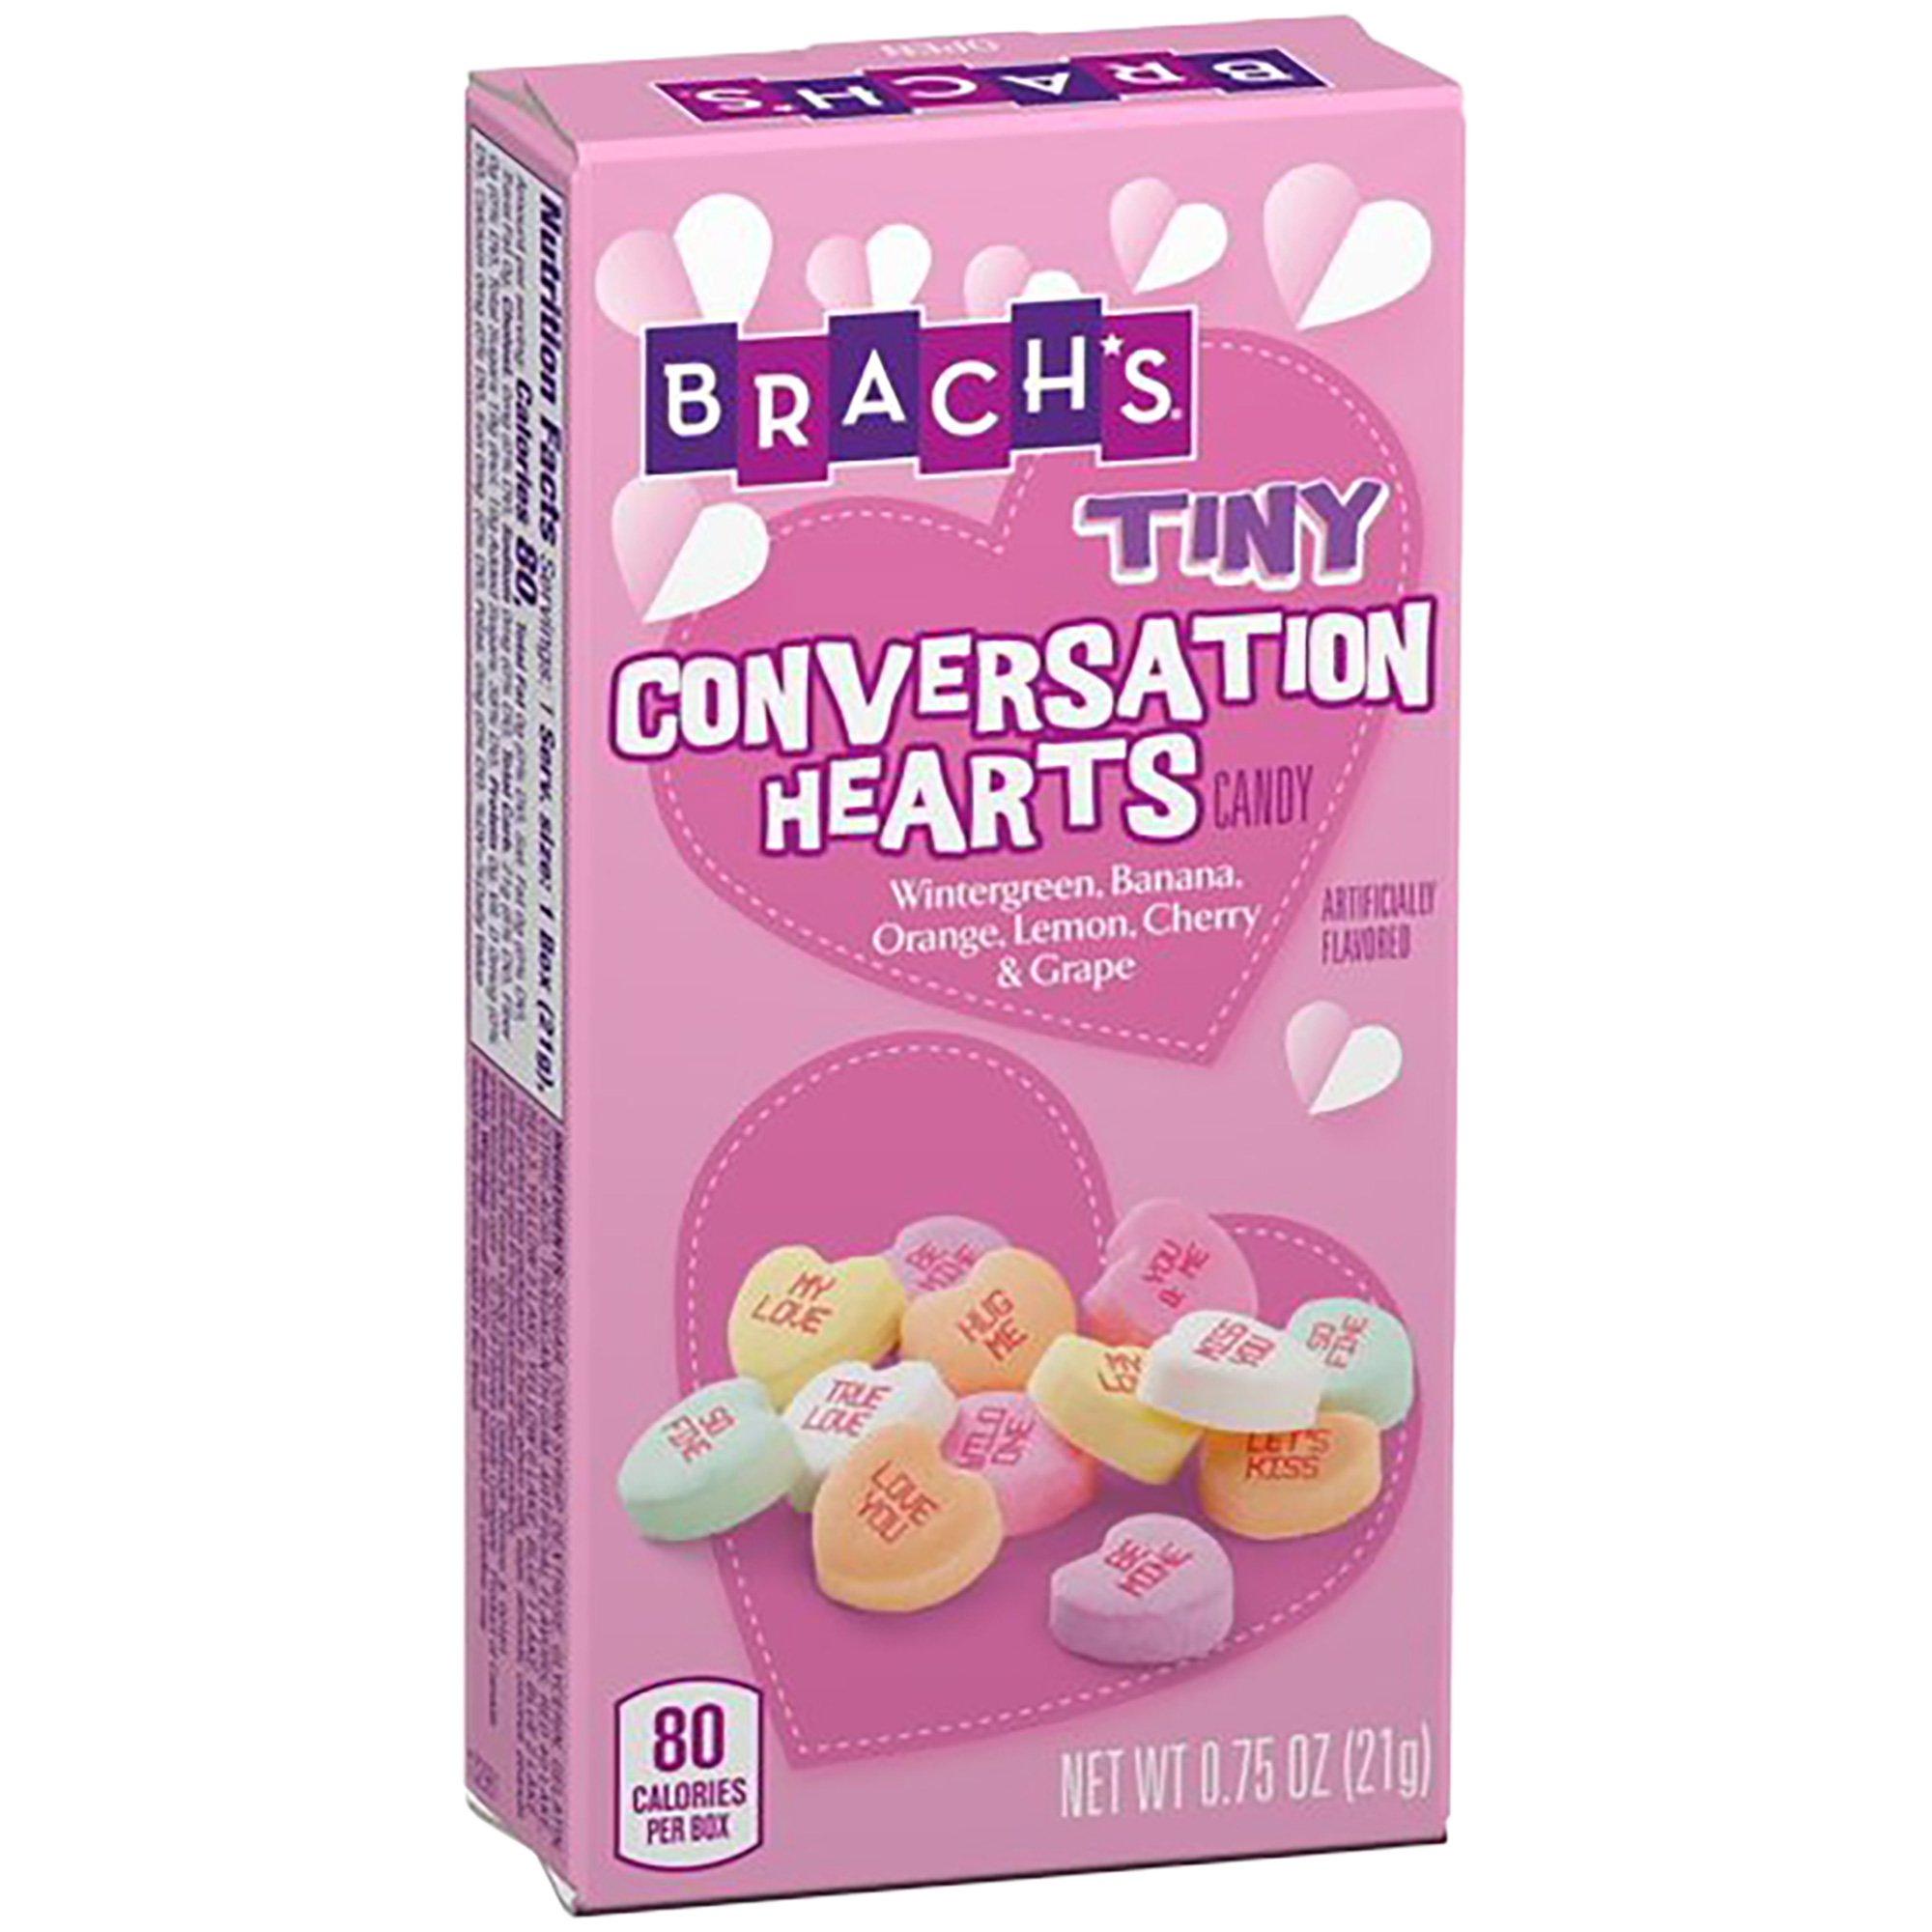 Tiny conversation hearts - Brach's - 1 oz